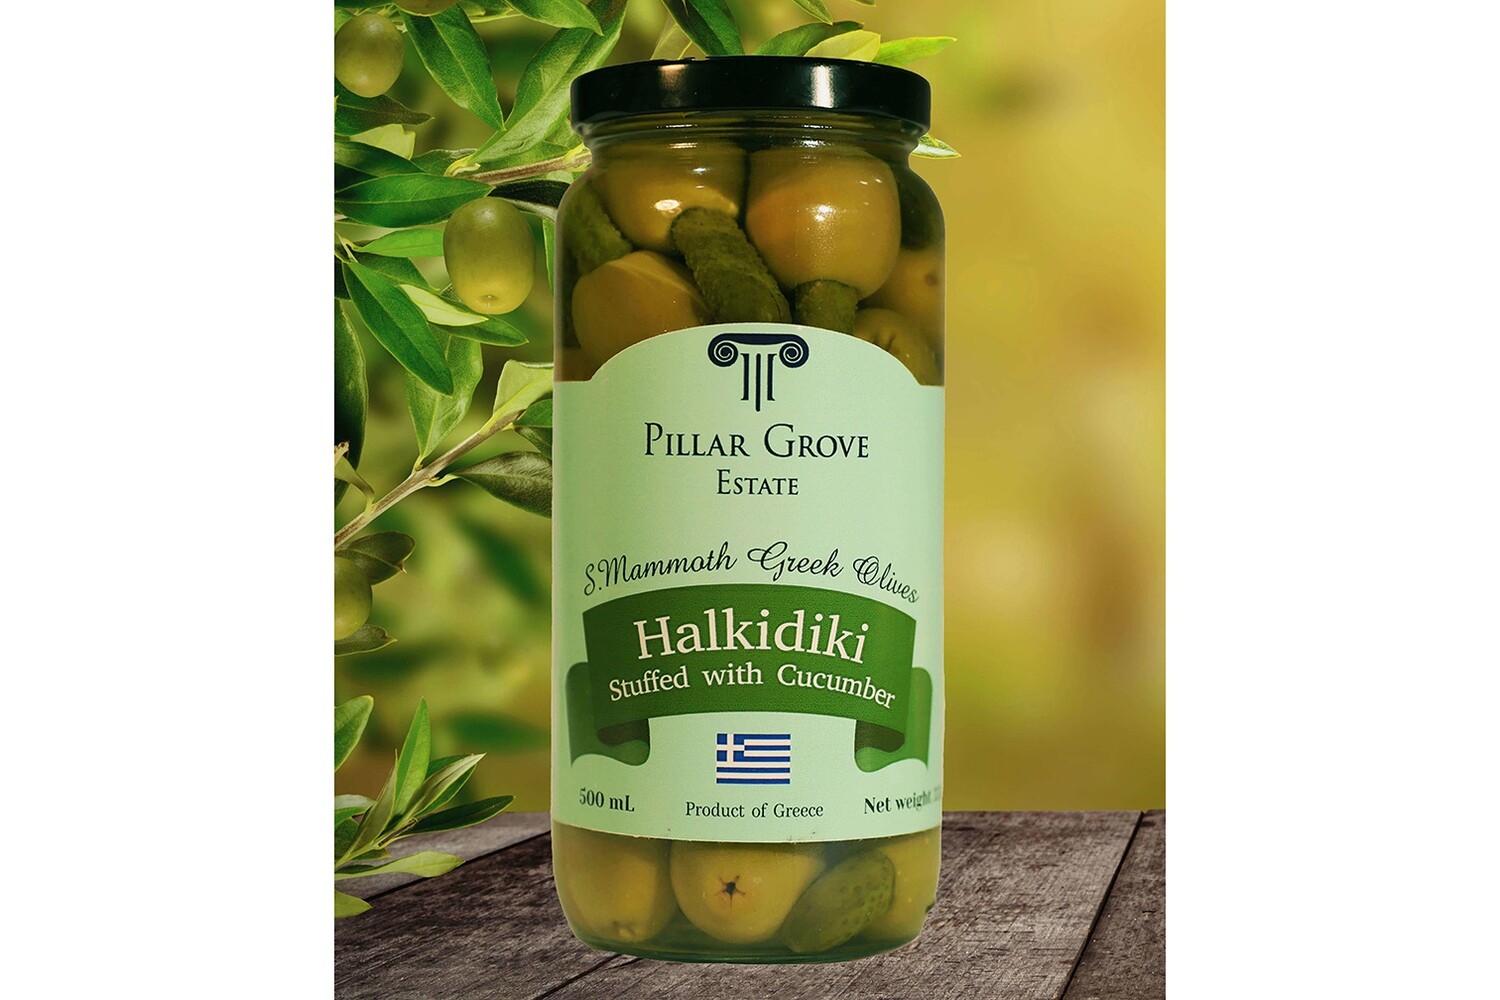 Halkidiki Green Olive Stuffed with Cucumber